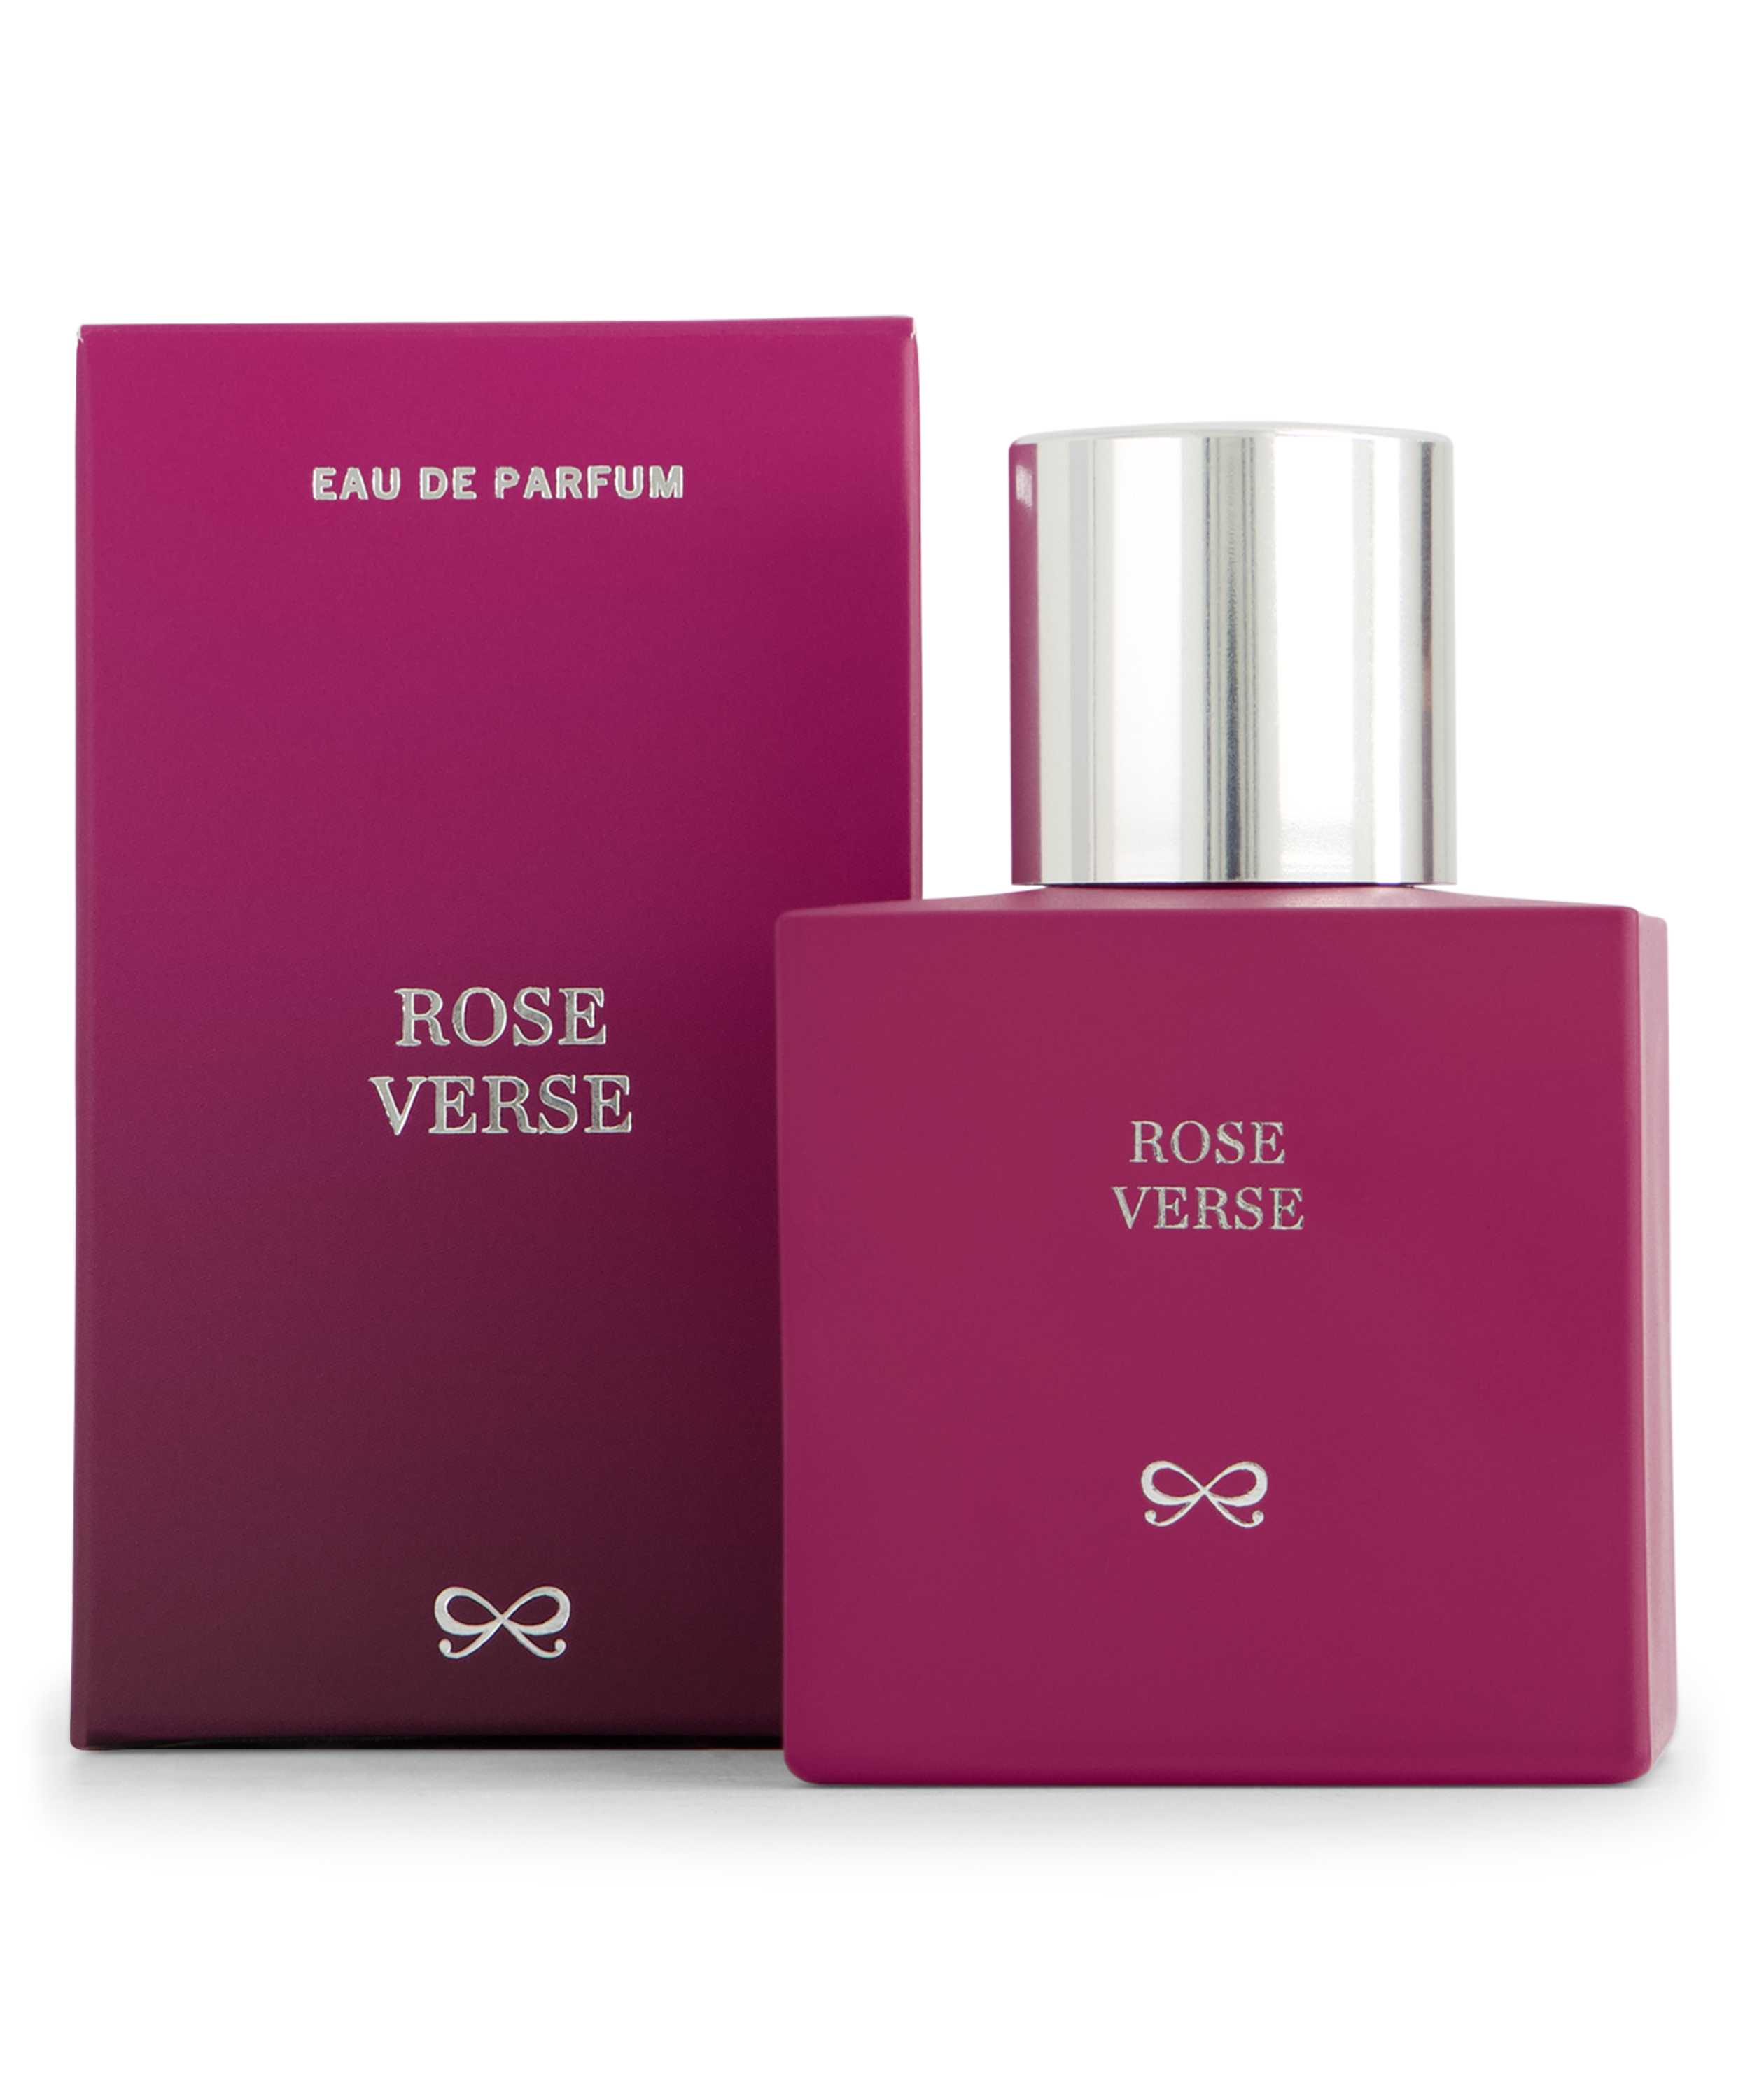 Eau de Parfum Rose Verse 50ml, White, main